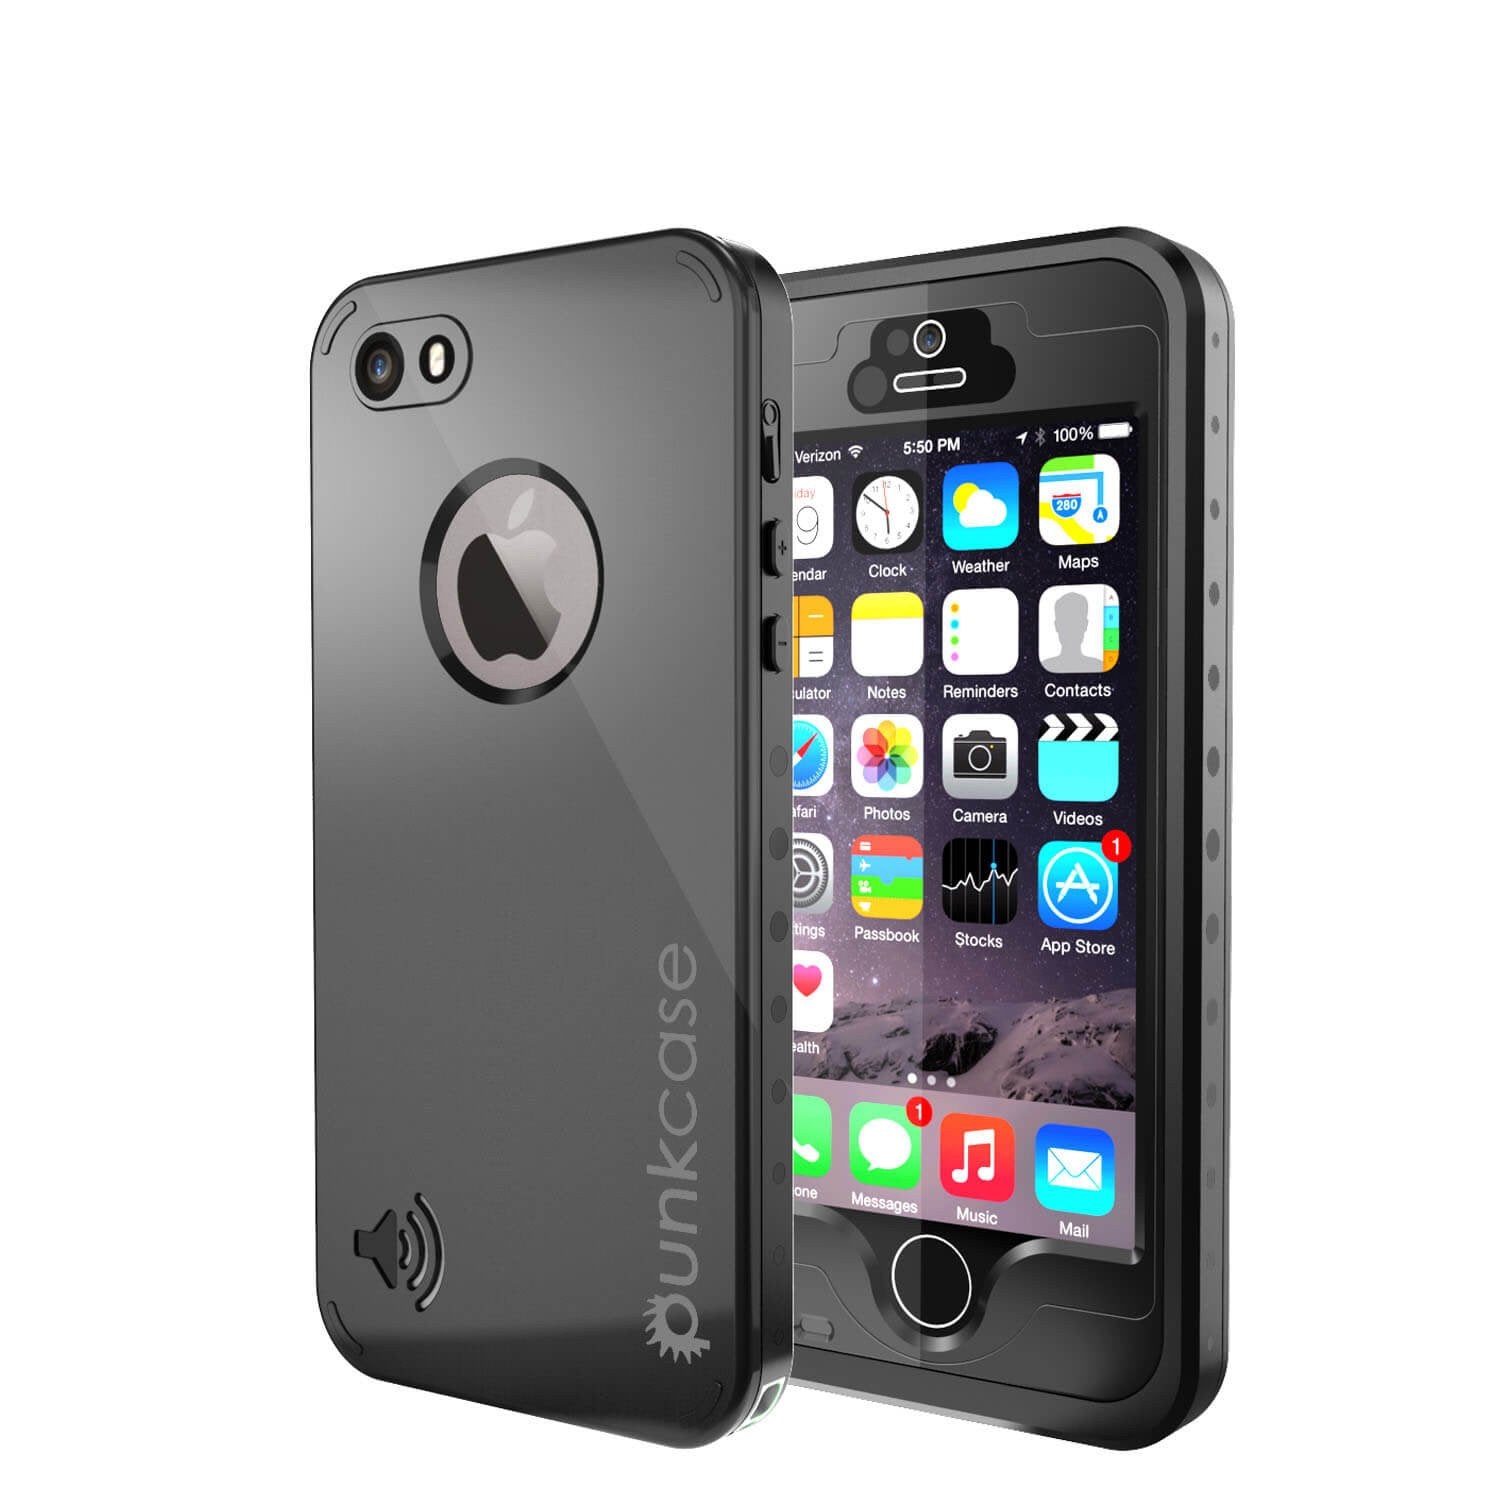 magnetron component glas Waterproof Iphone 5 Case Sale, SAVE 41% - raptorunderlayment.com